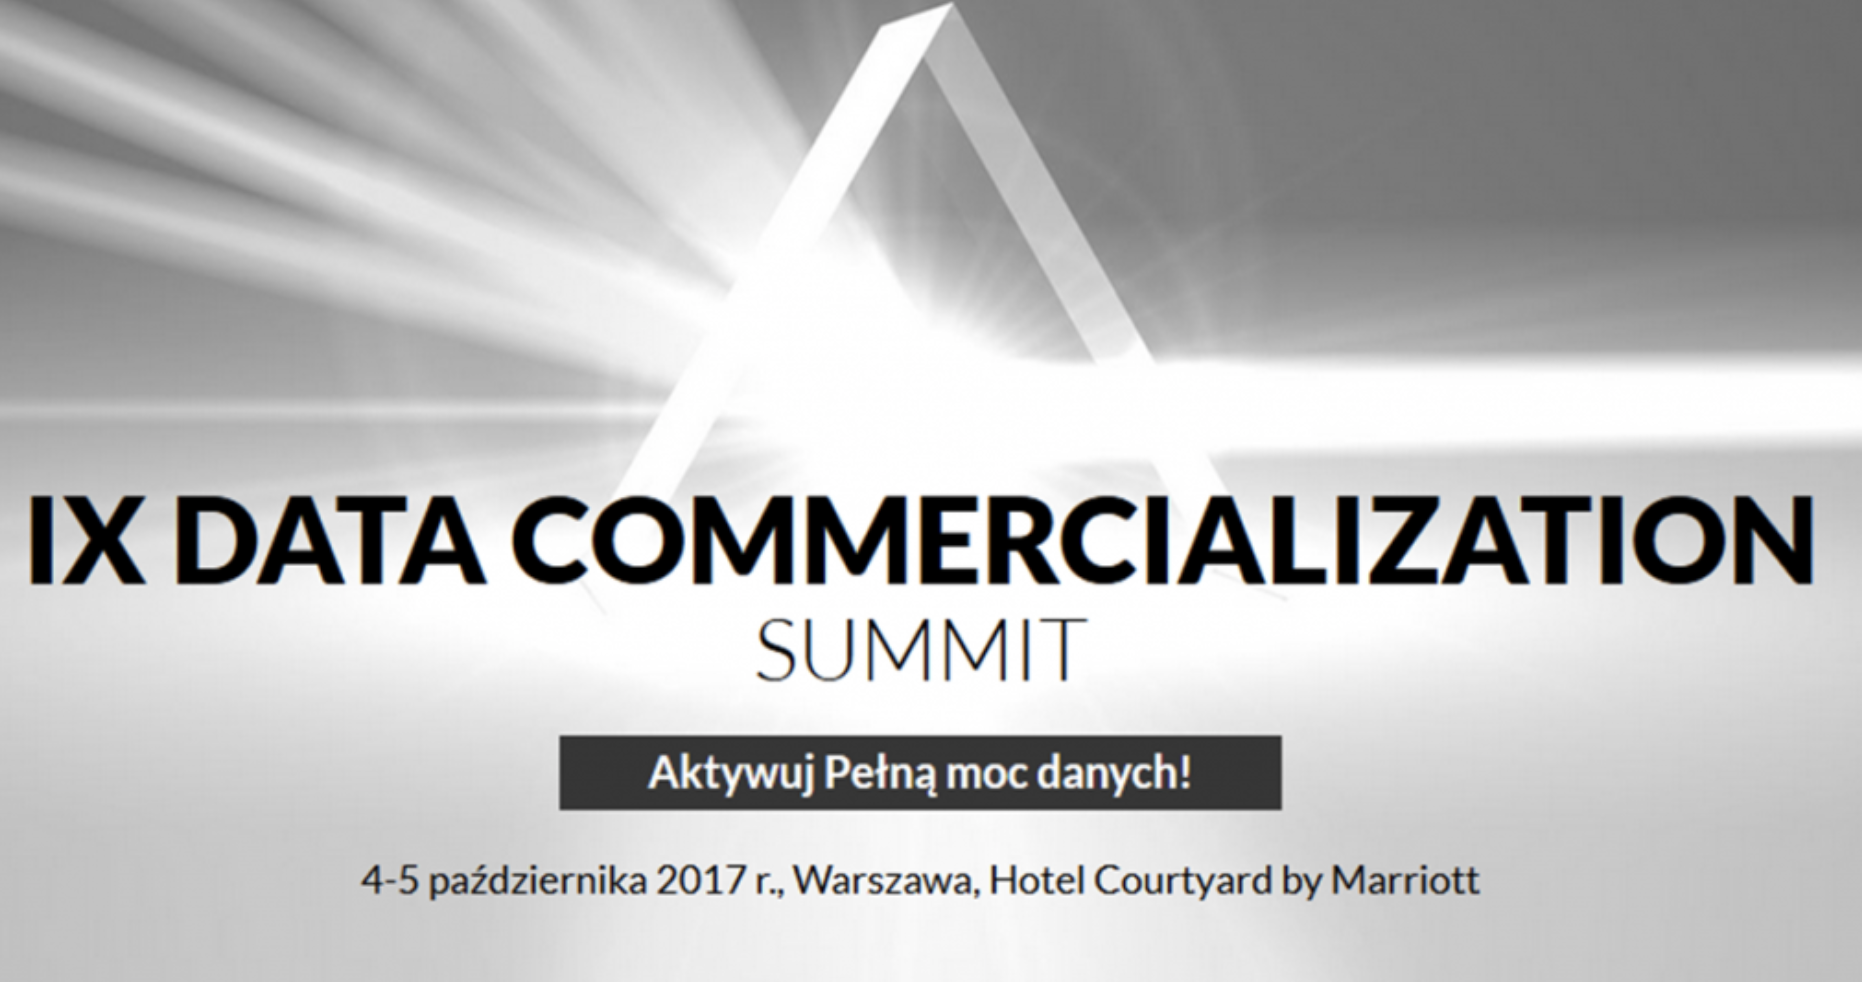 Data commercialization summit